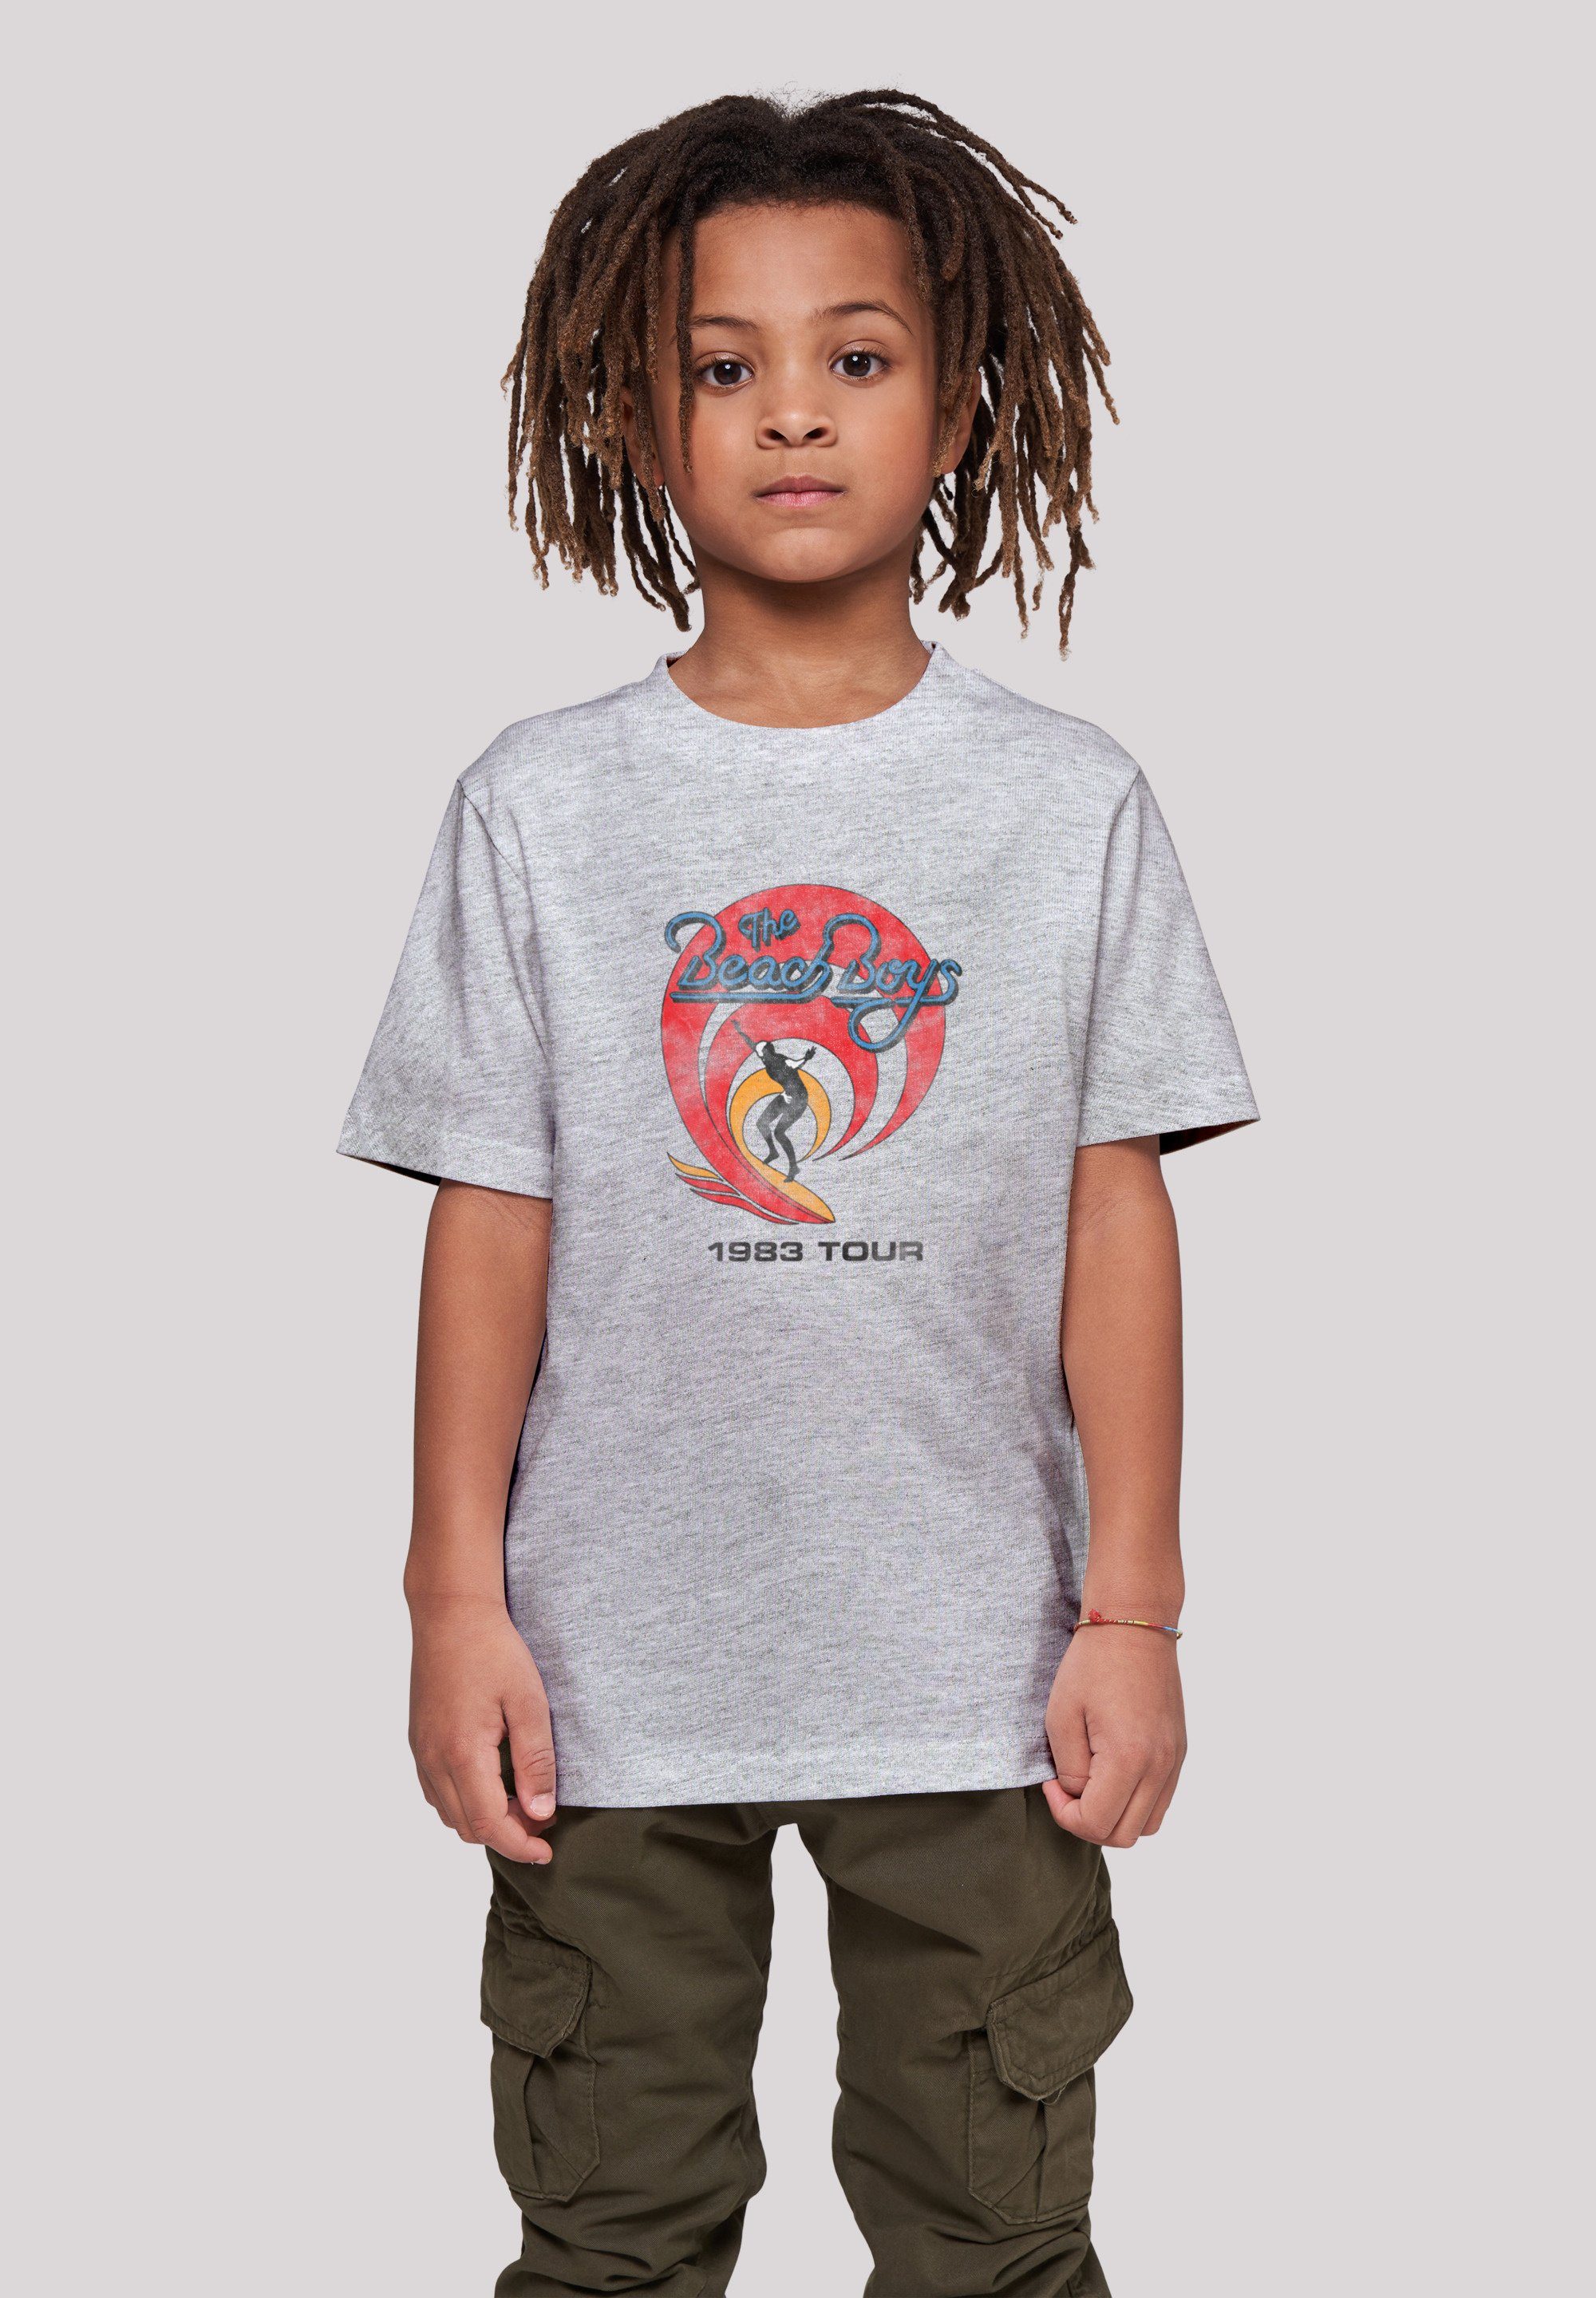 F4NT4STIC T-Shirt The Vintage Print Band Boys Beach Surfer grey '83 heather